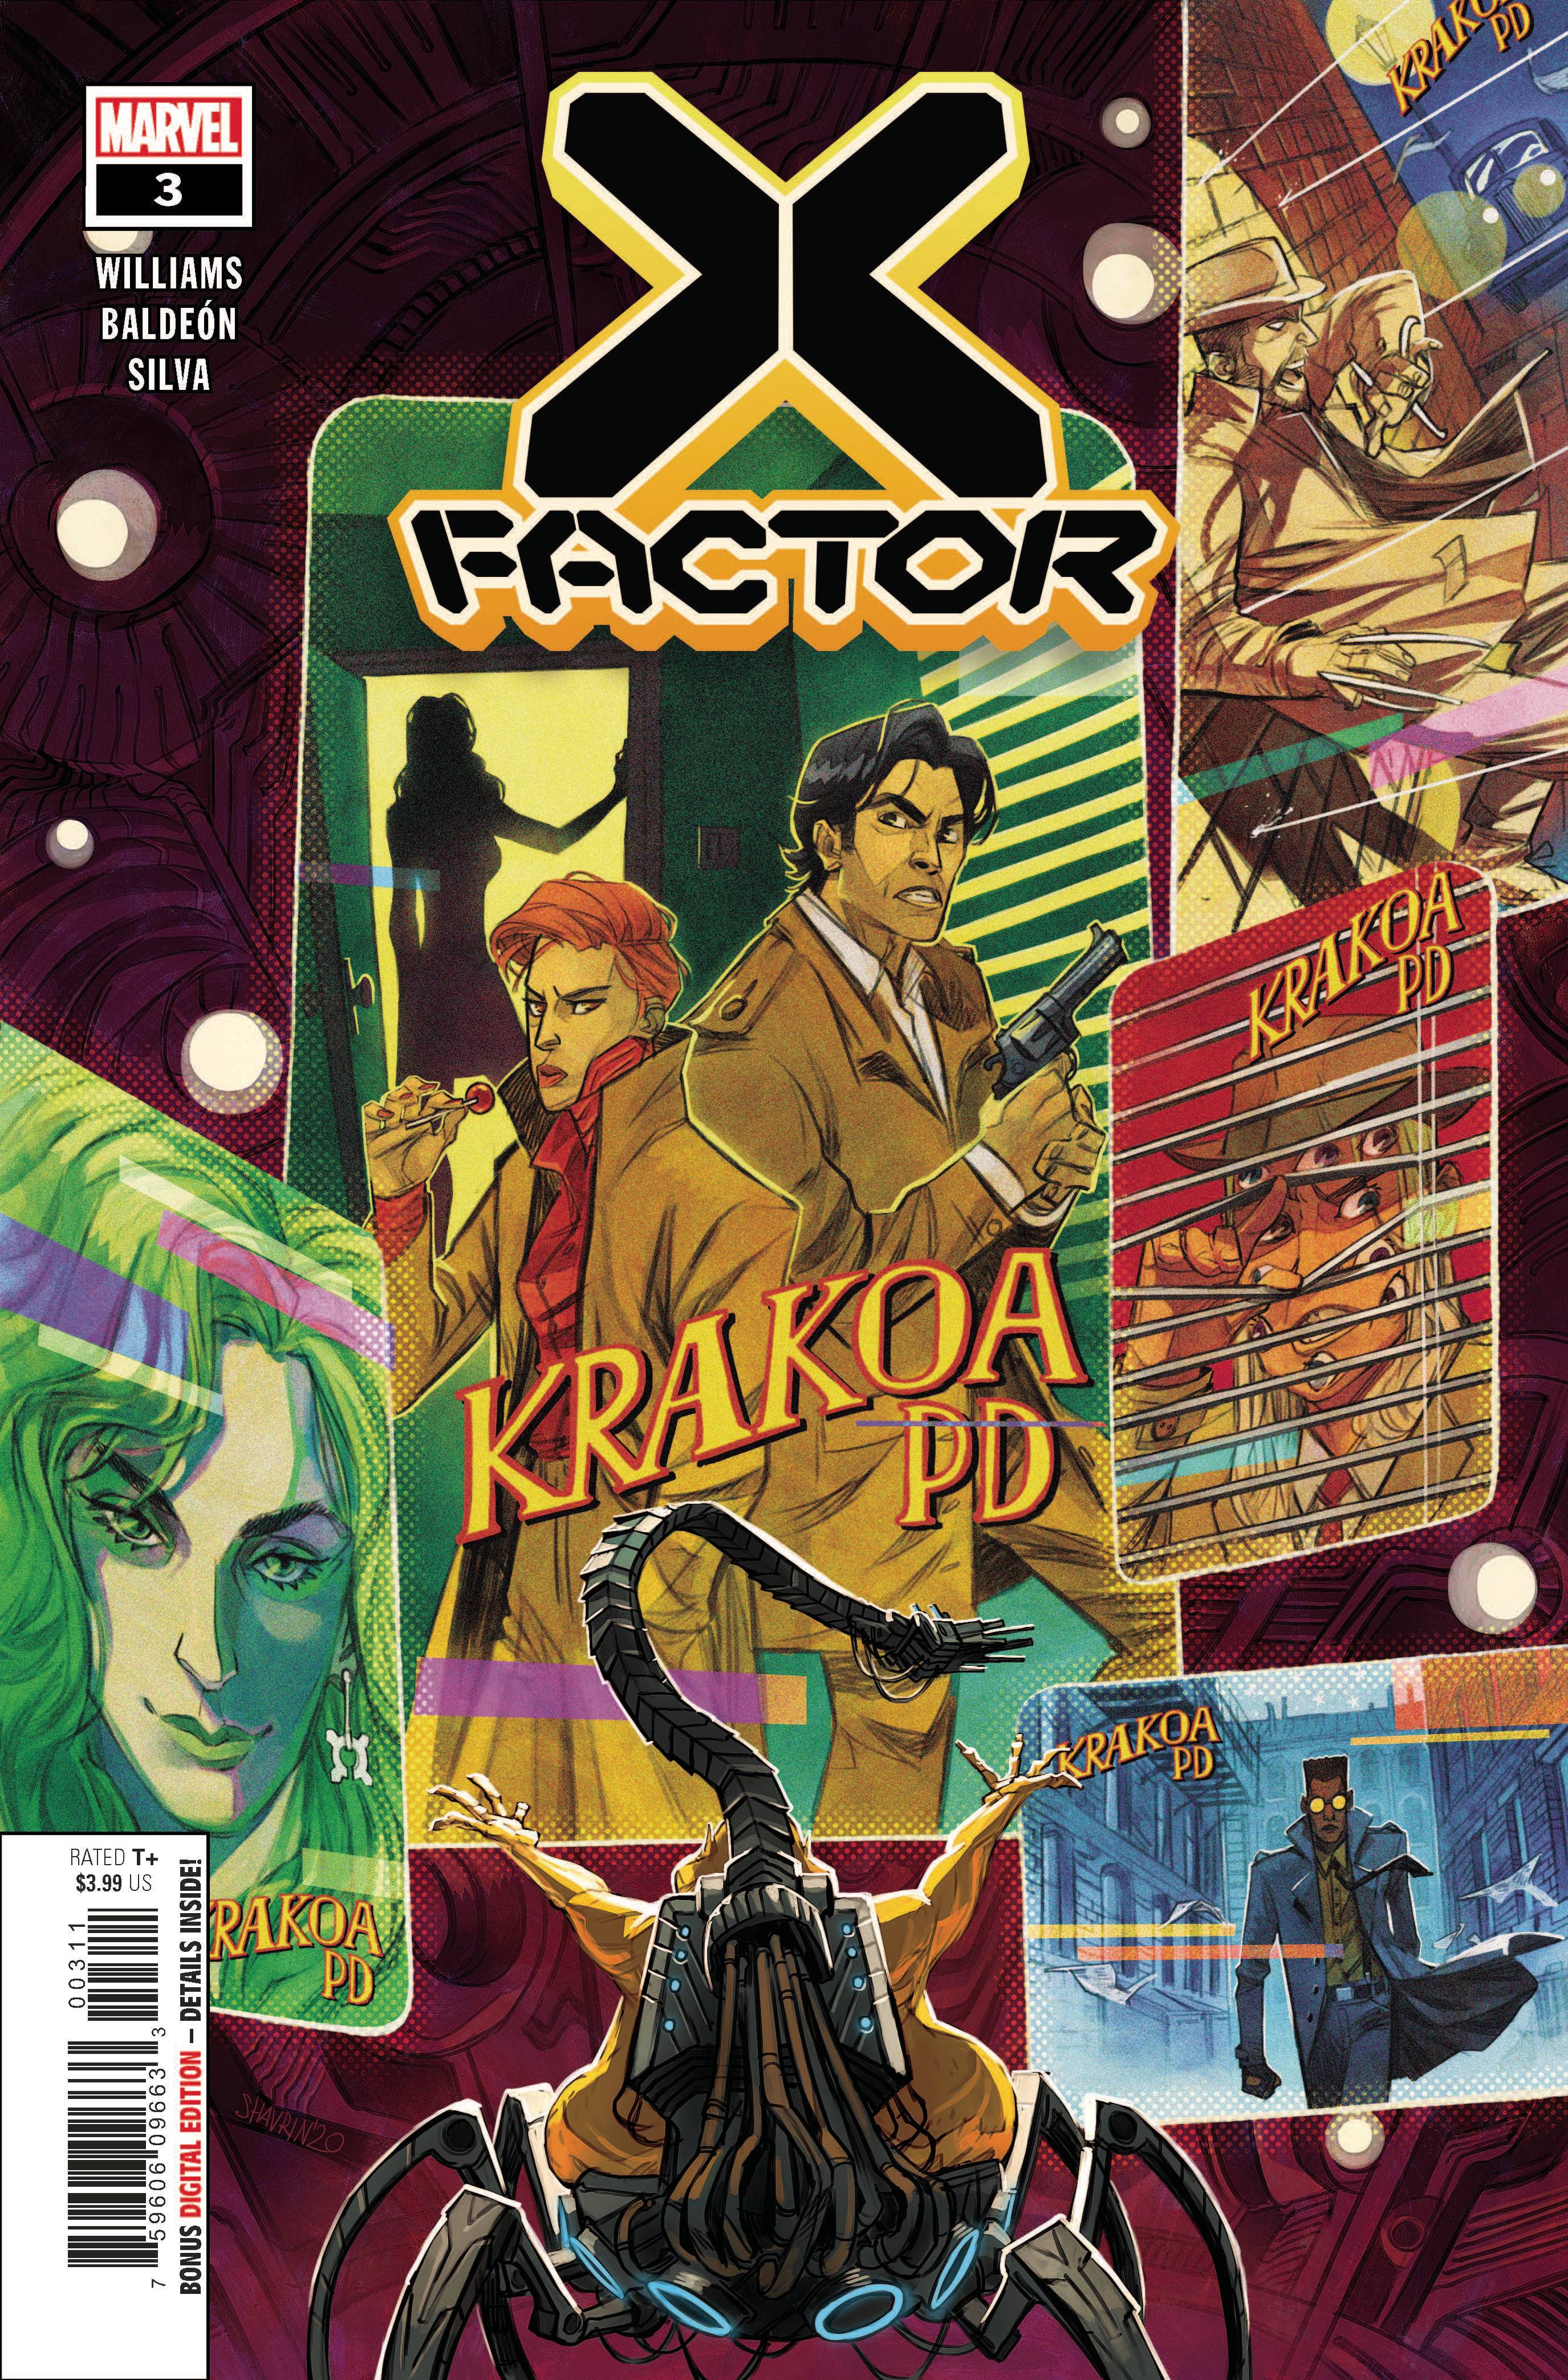 X-FACTOR #3 | Game Master's Emporium (The New GME)